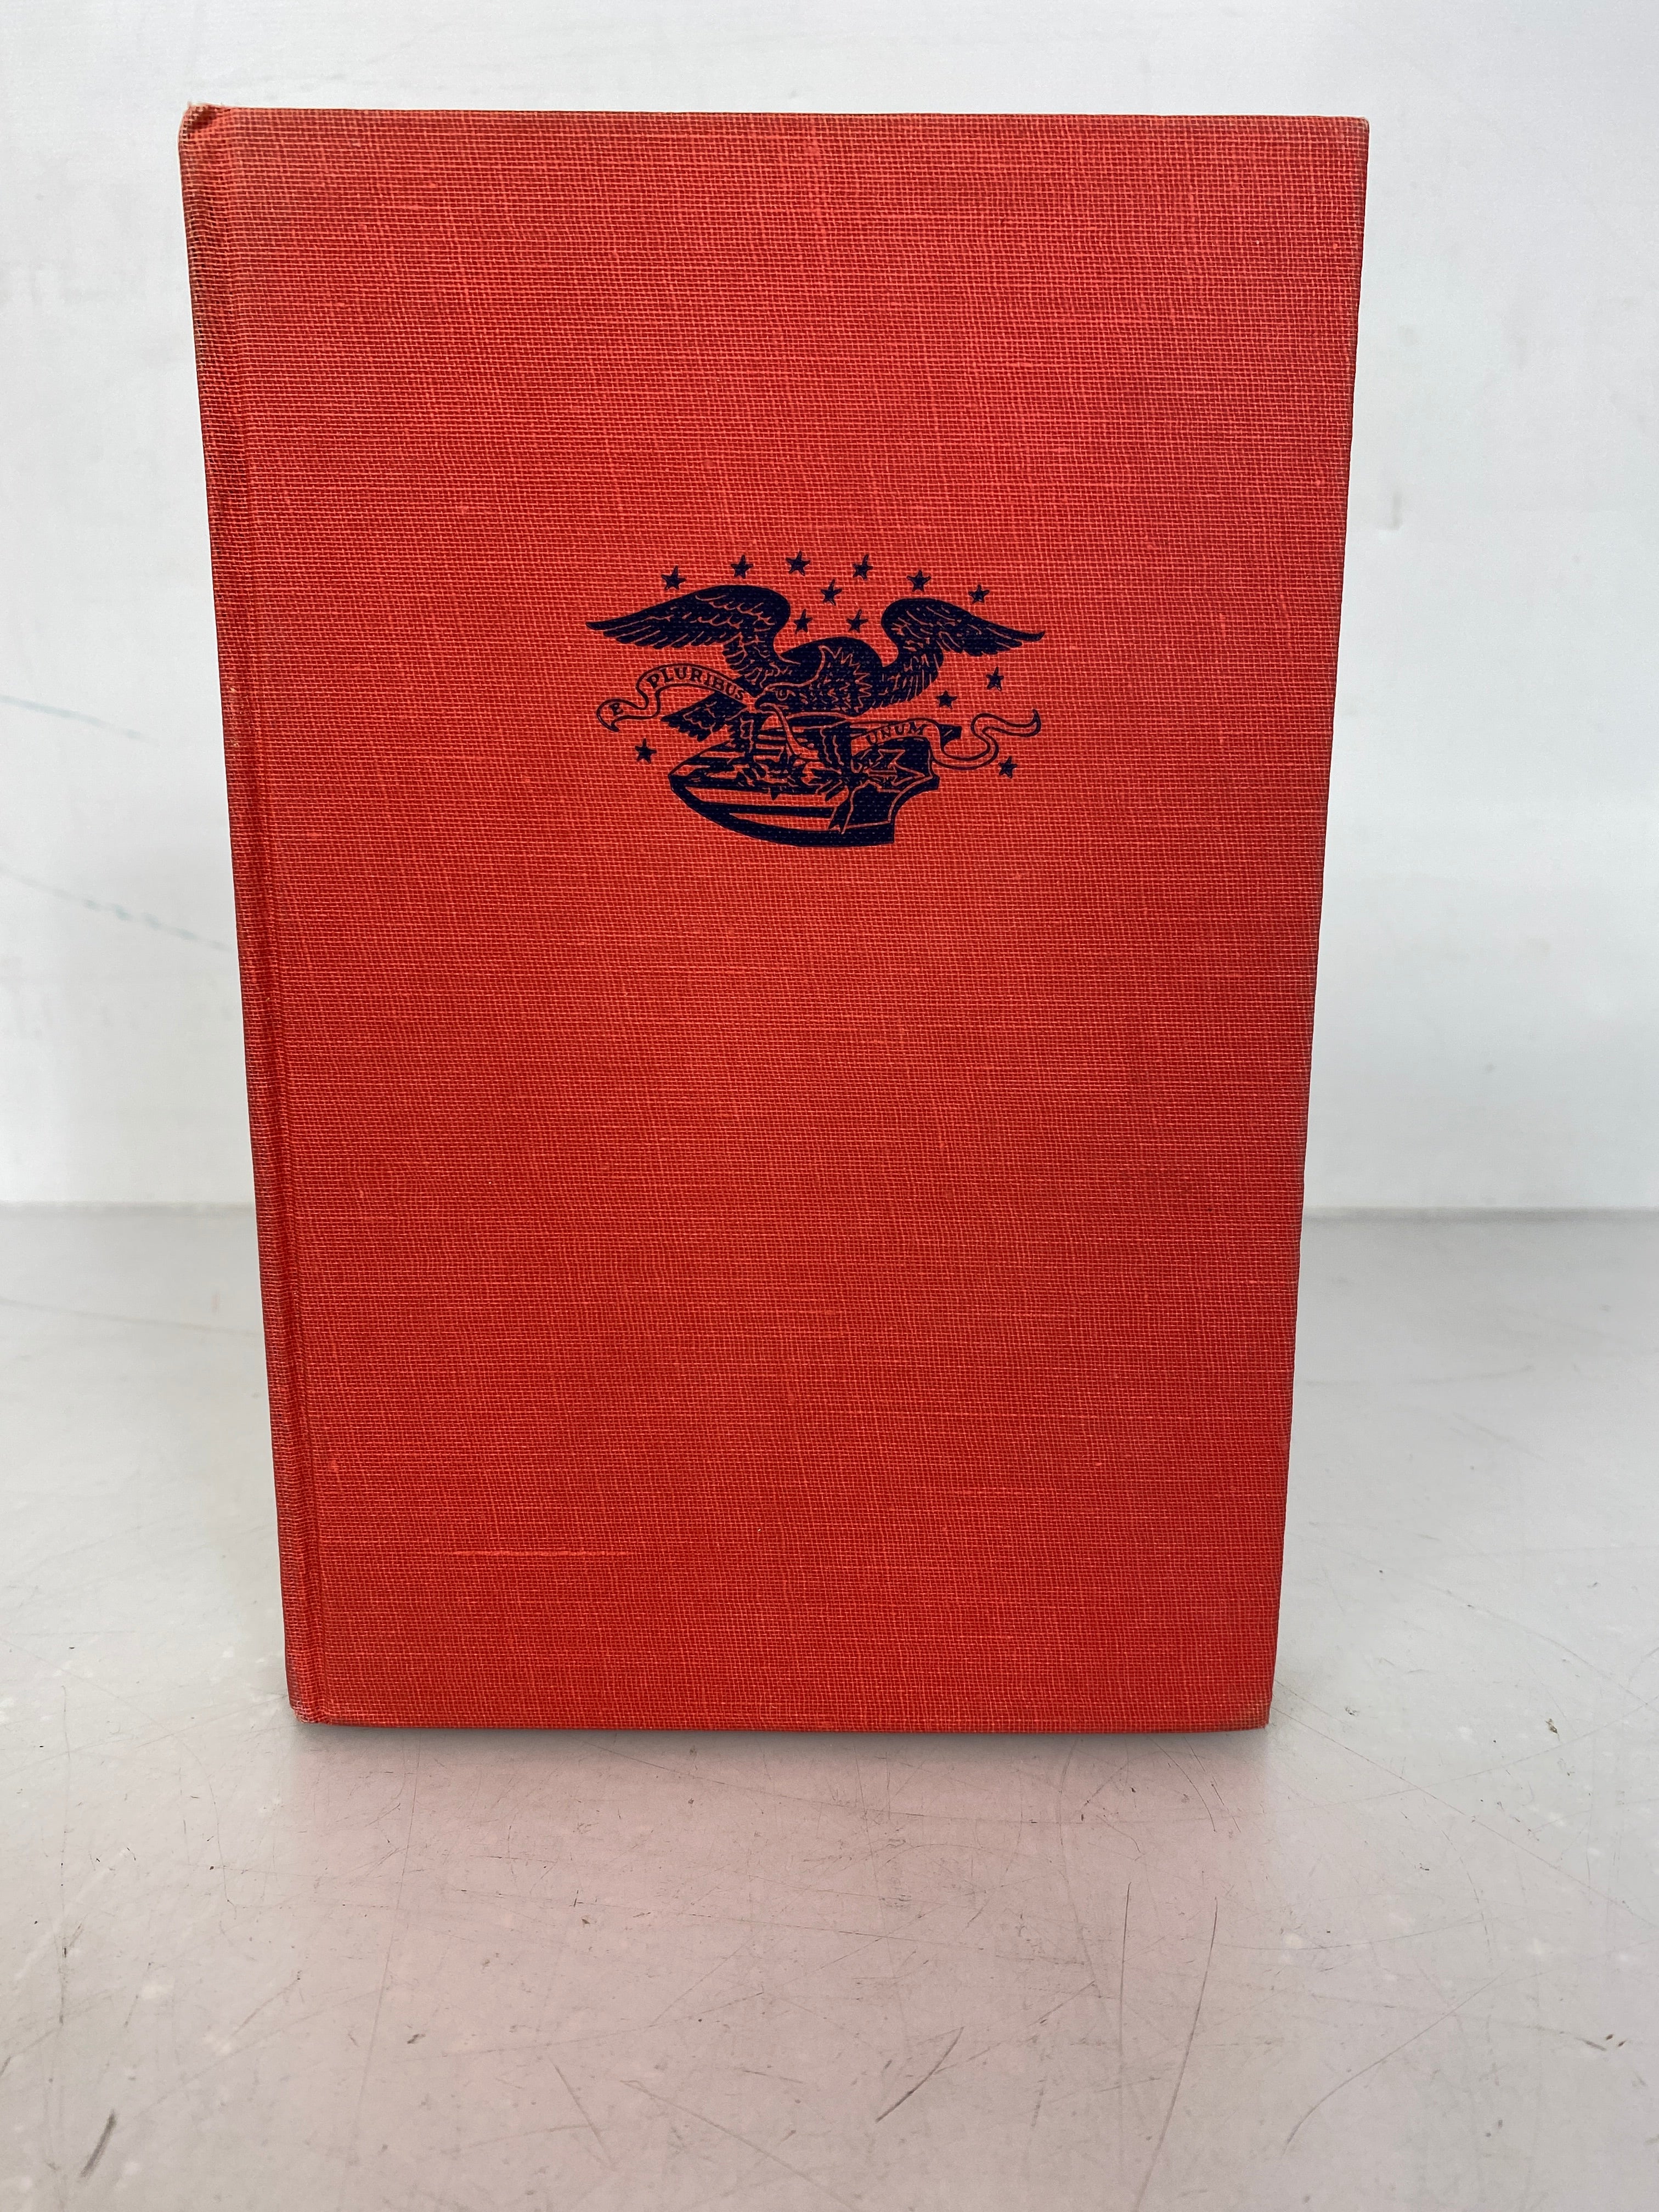 John Philip Sousa by Ann M. Lingg 1954 First Edition HC